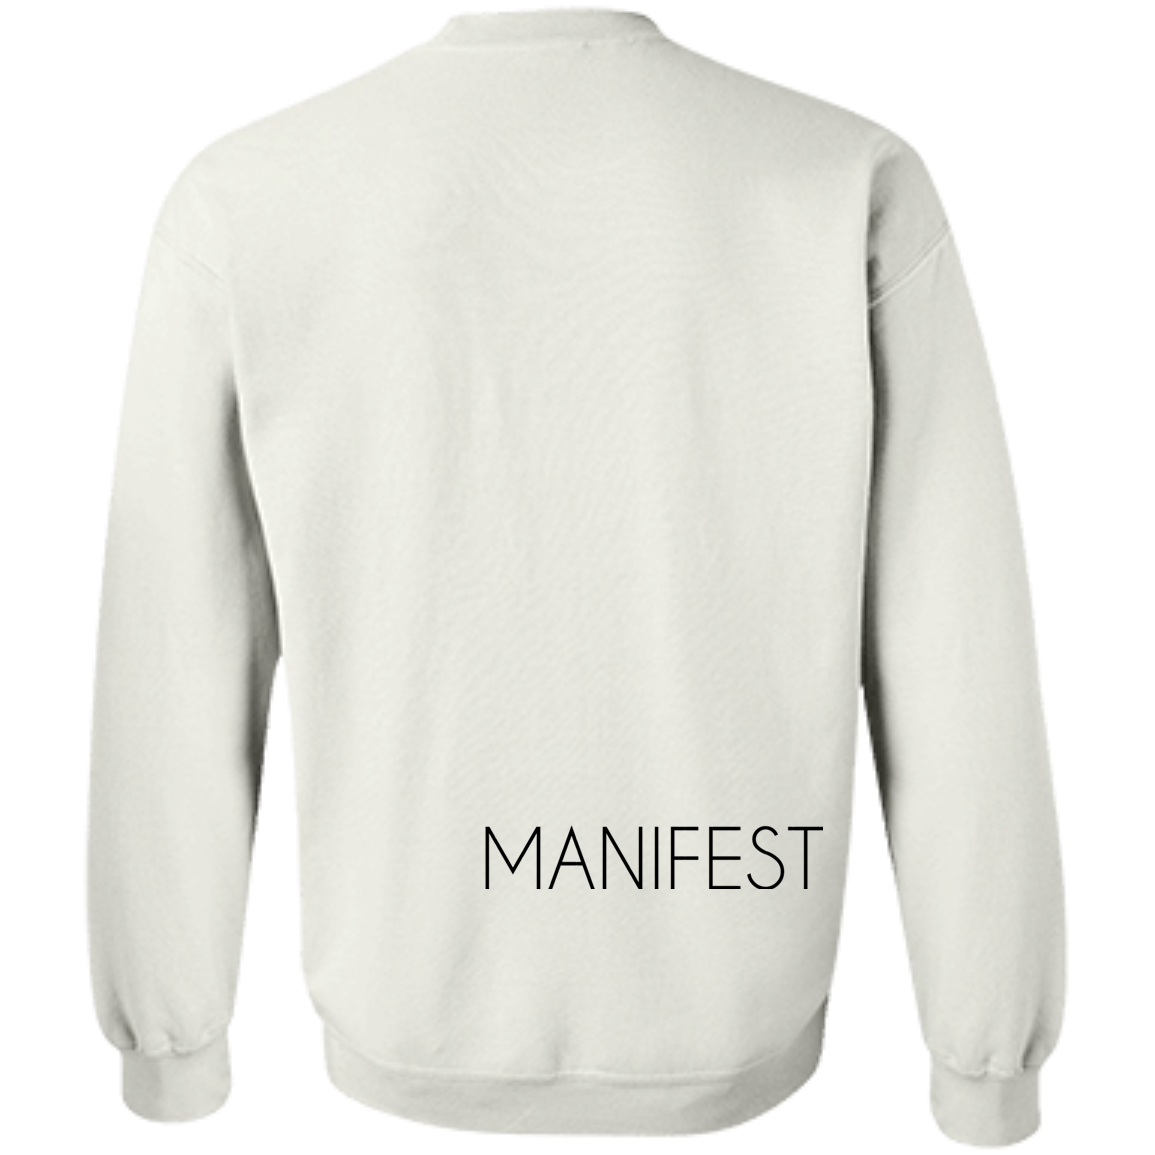 Manifest Crewneck - Black on White